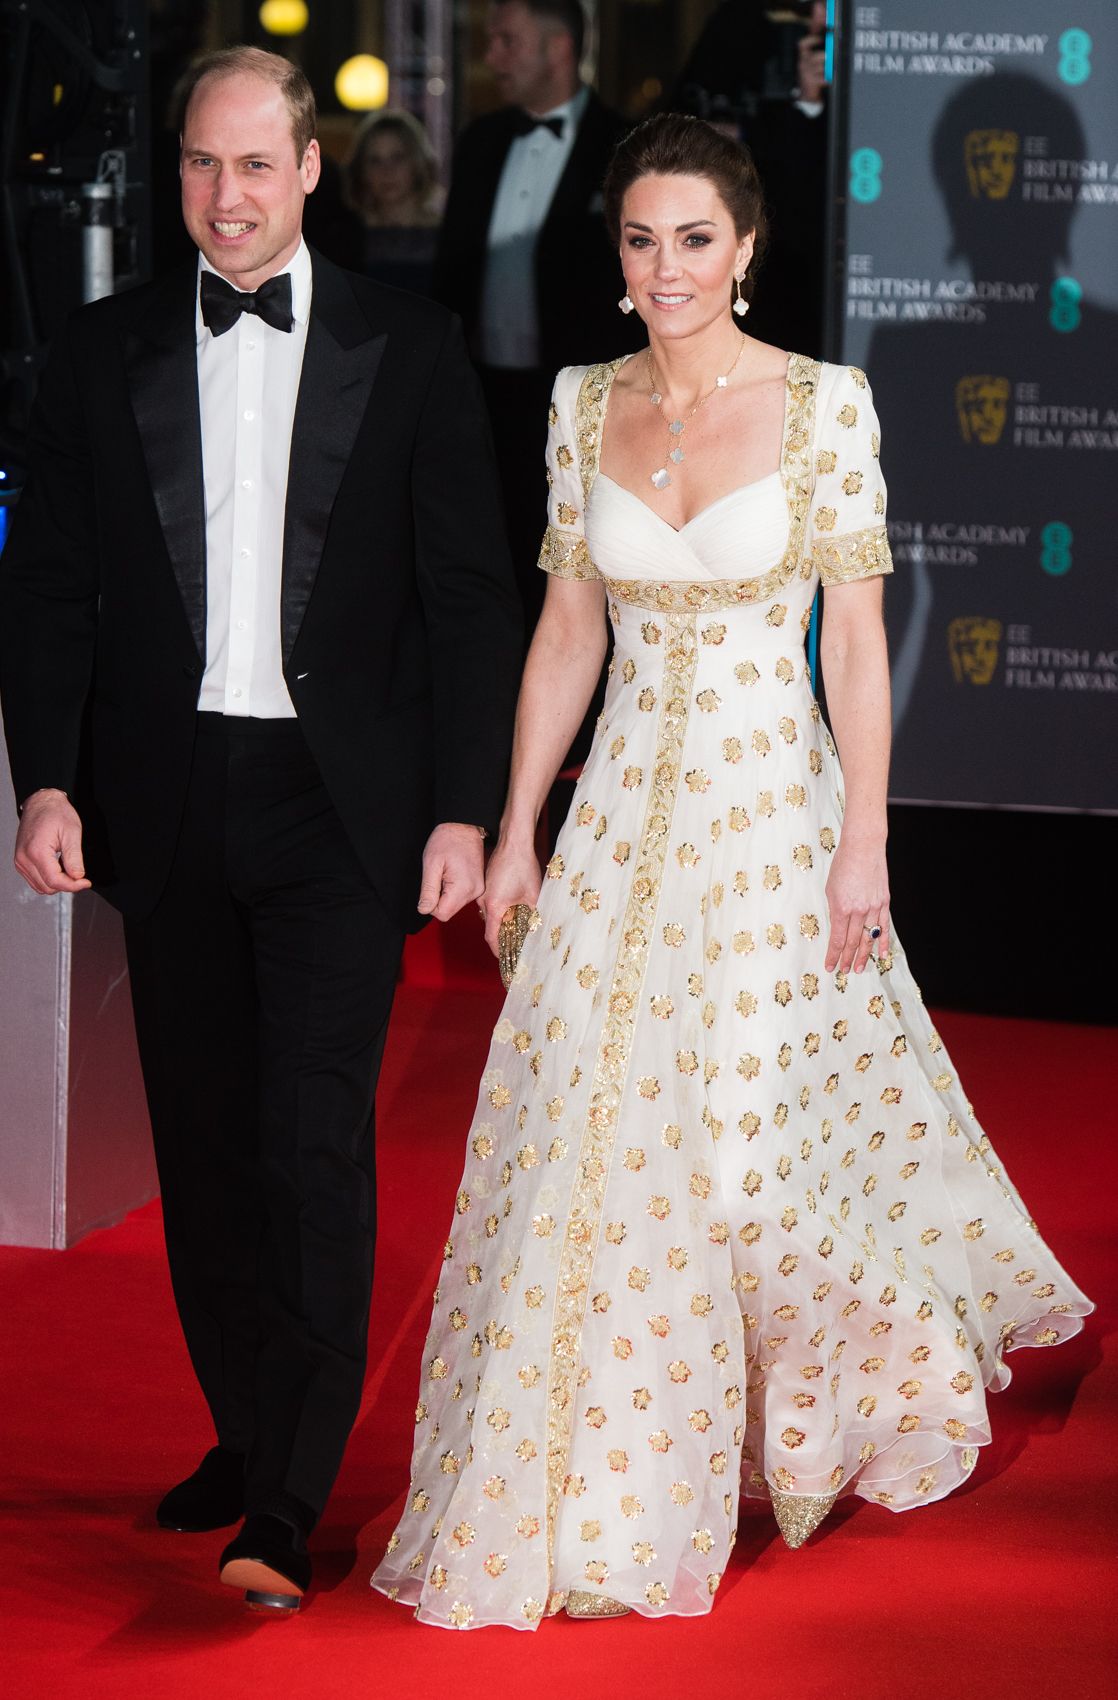 Kate Middleton May Have Chosen a Favorite Maternity Dress | Vanity Fair